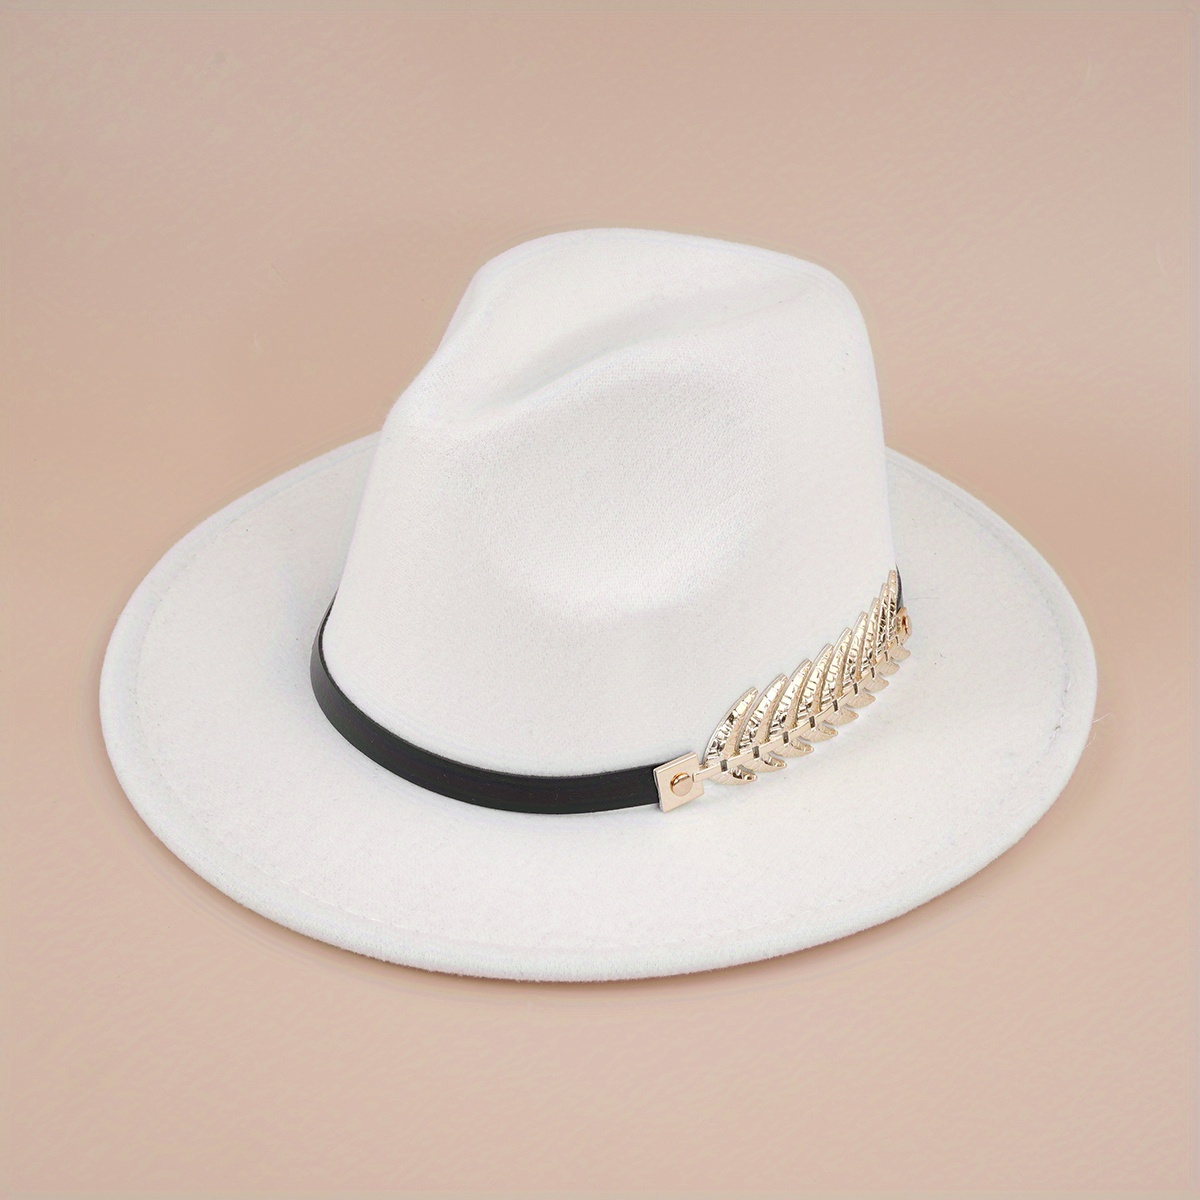 Chuarry 4 Pcs Women Men Felt Western Cowboy Hats Wide Brim Cowgirl Hats  Panama Hat for Adults Costume Outdoor